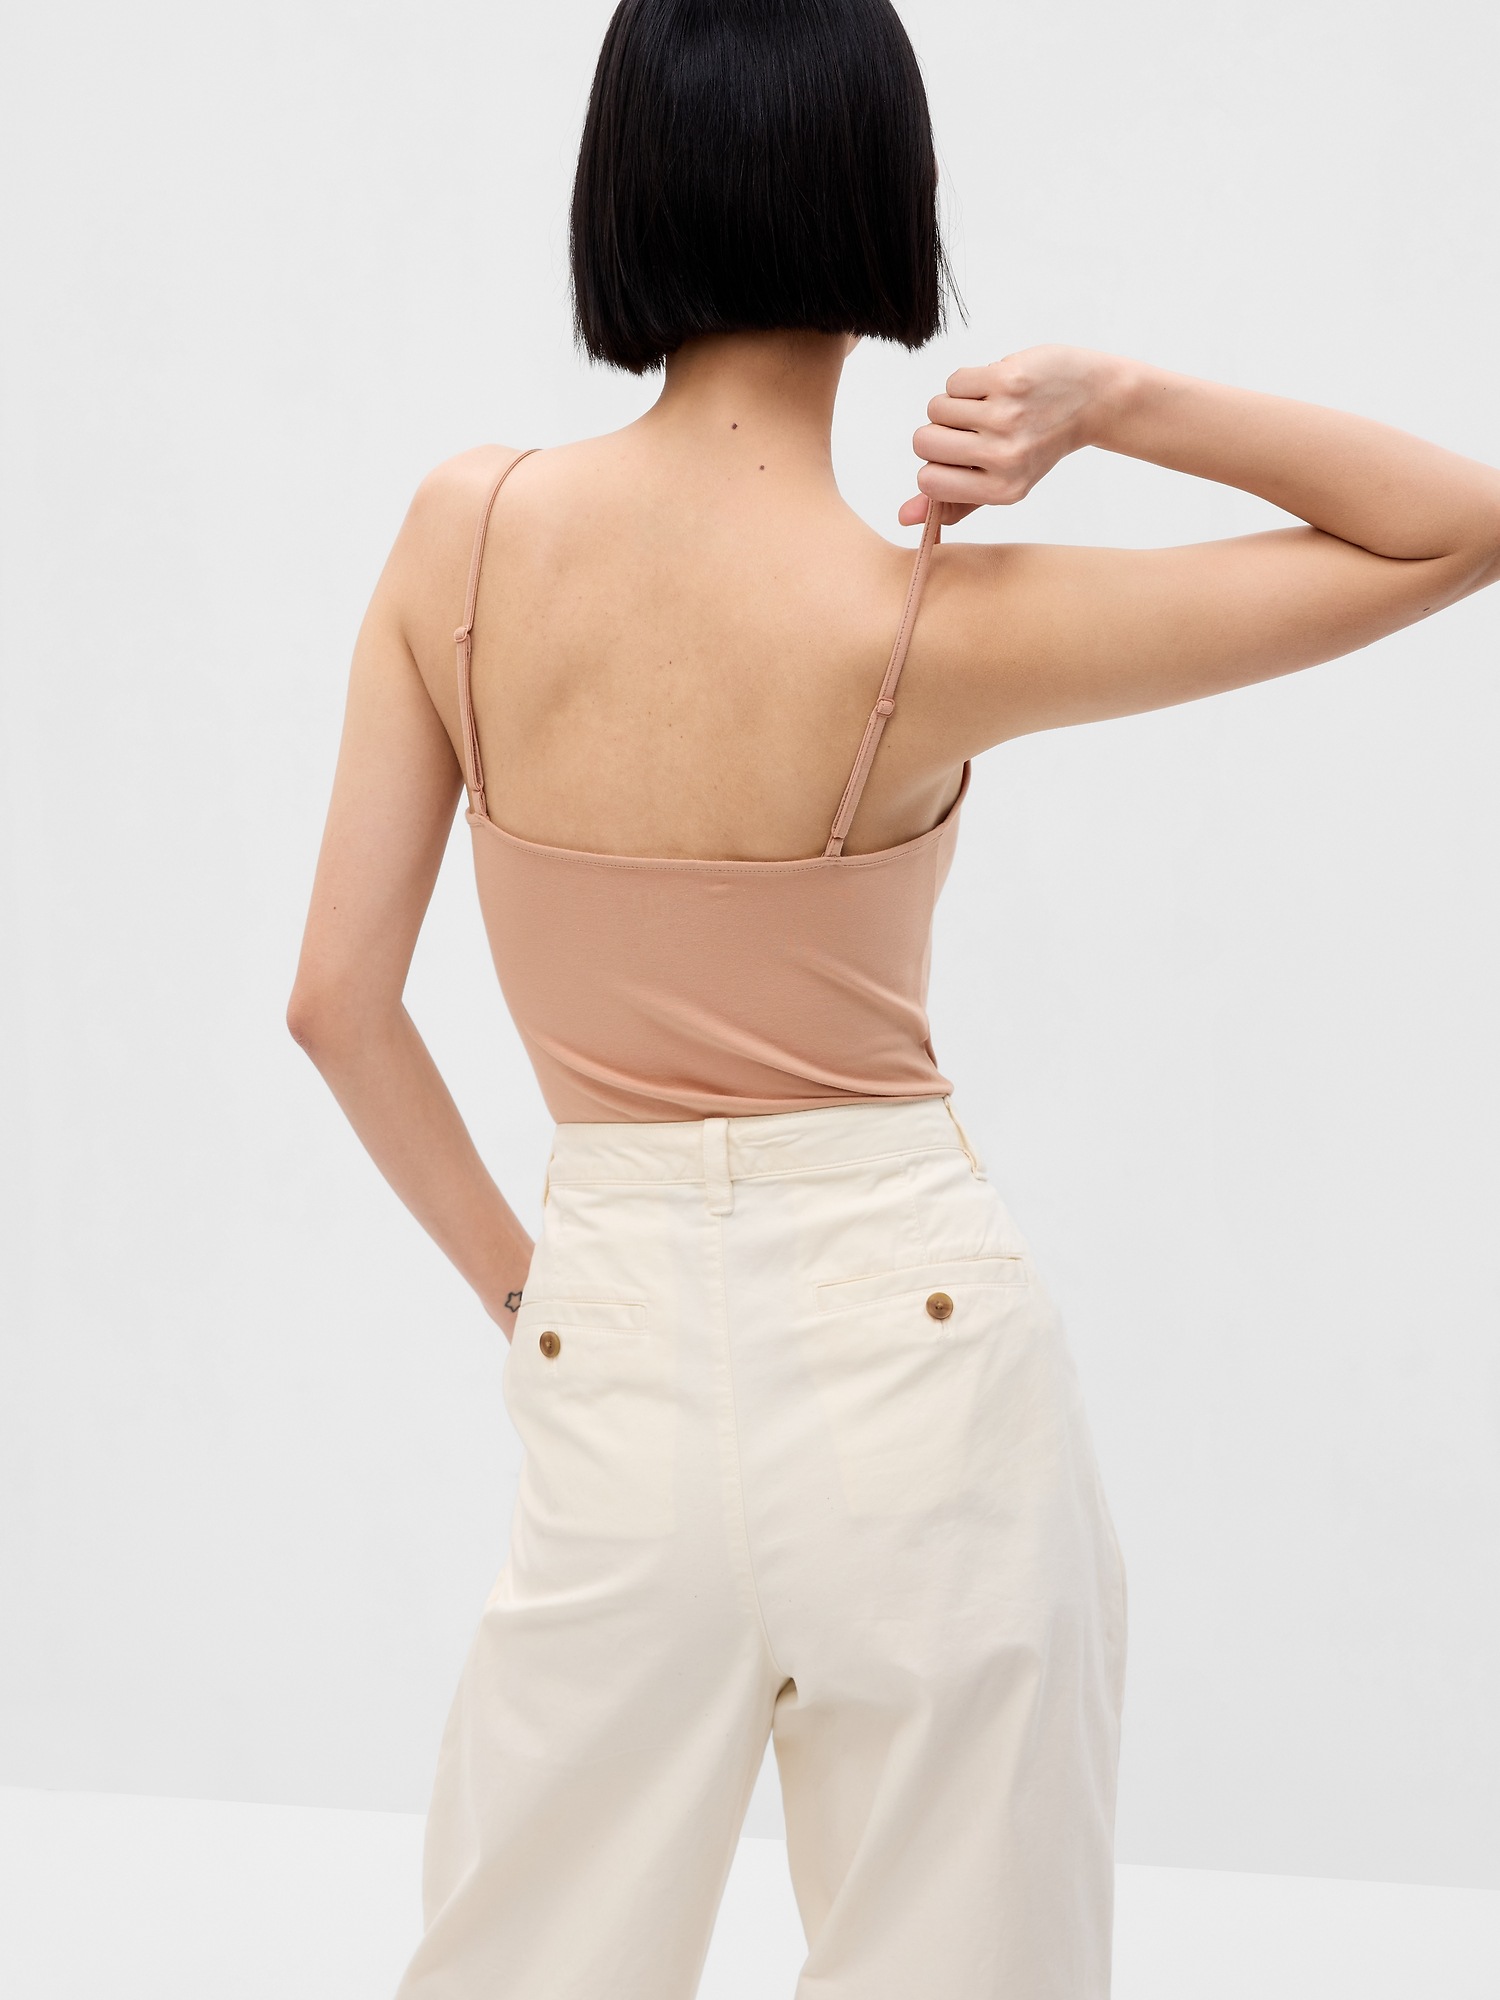 Low Back Bra in Bra Womens Tank Tops Strap Stretch Cotton Camisole